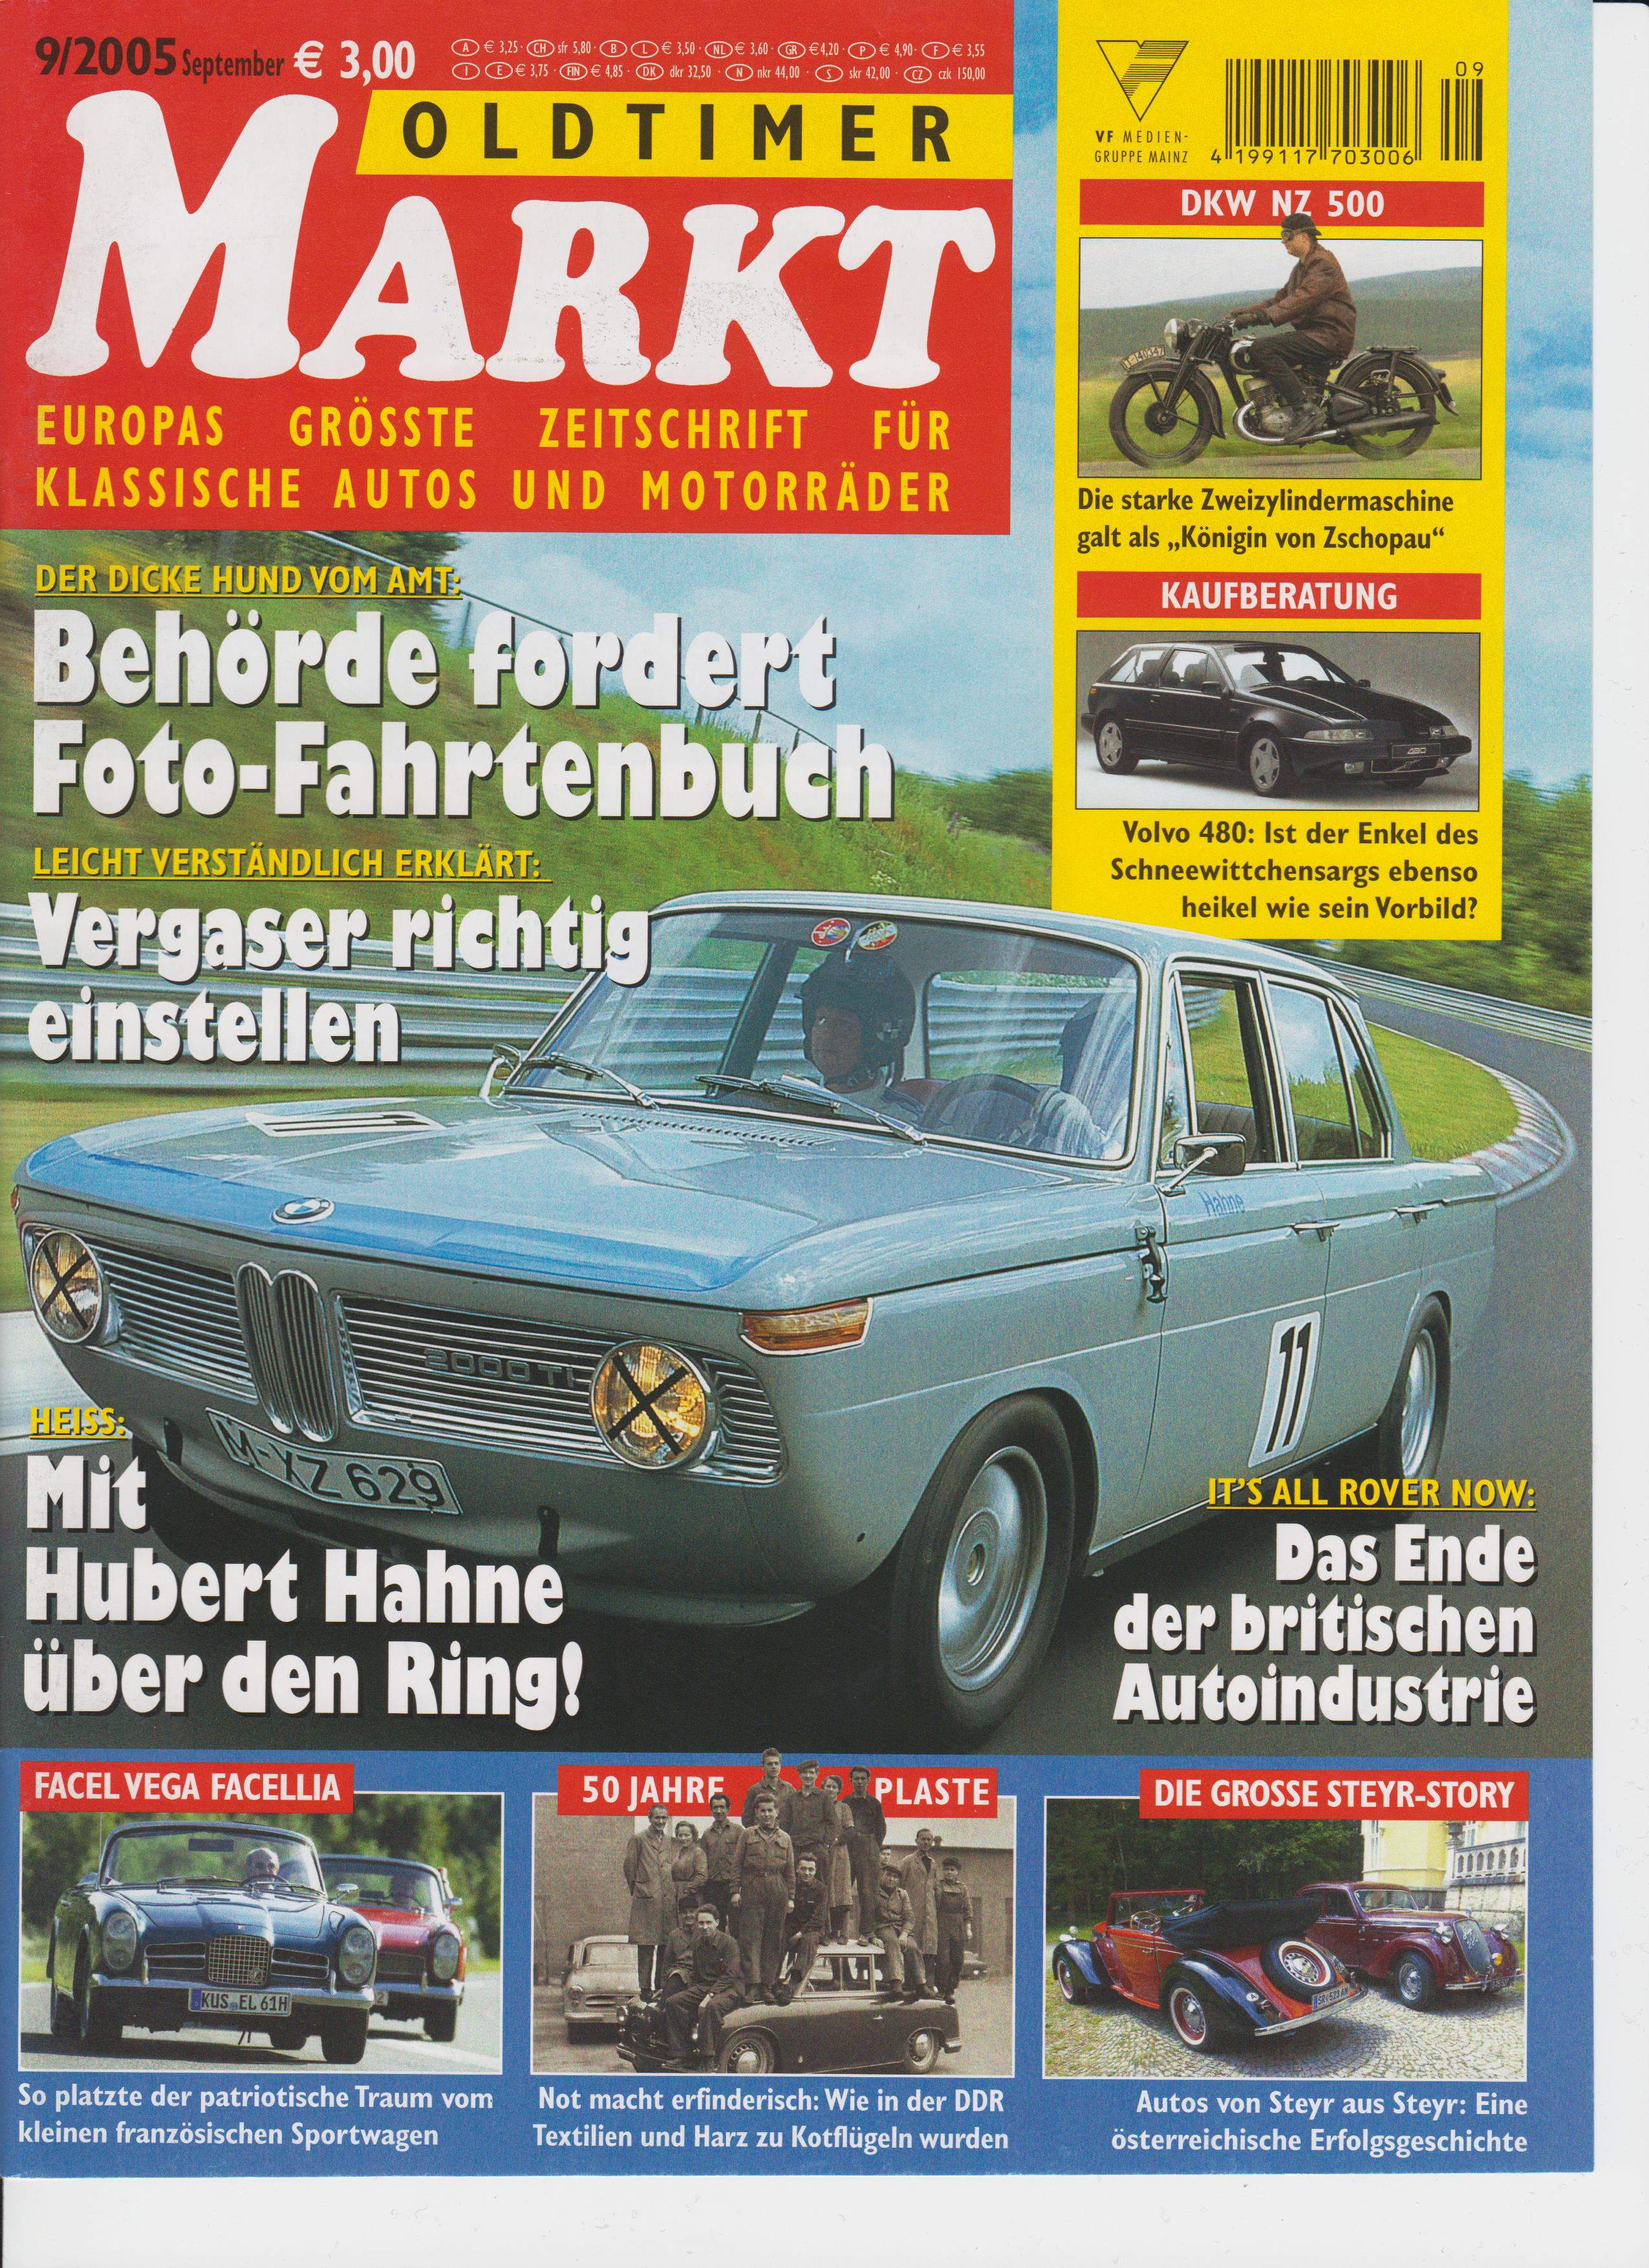 Revista especializada Oldtimer Markt 09 2005